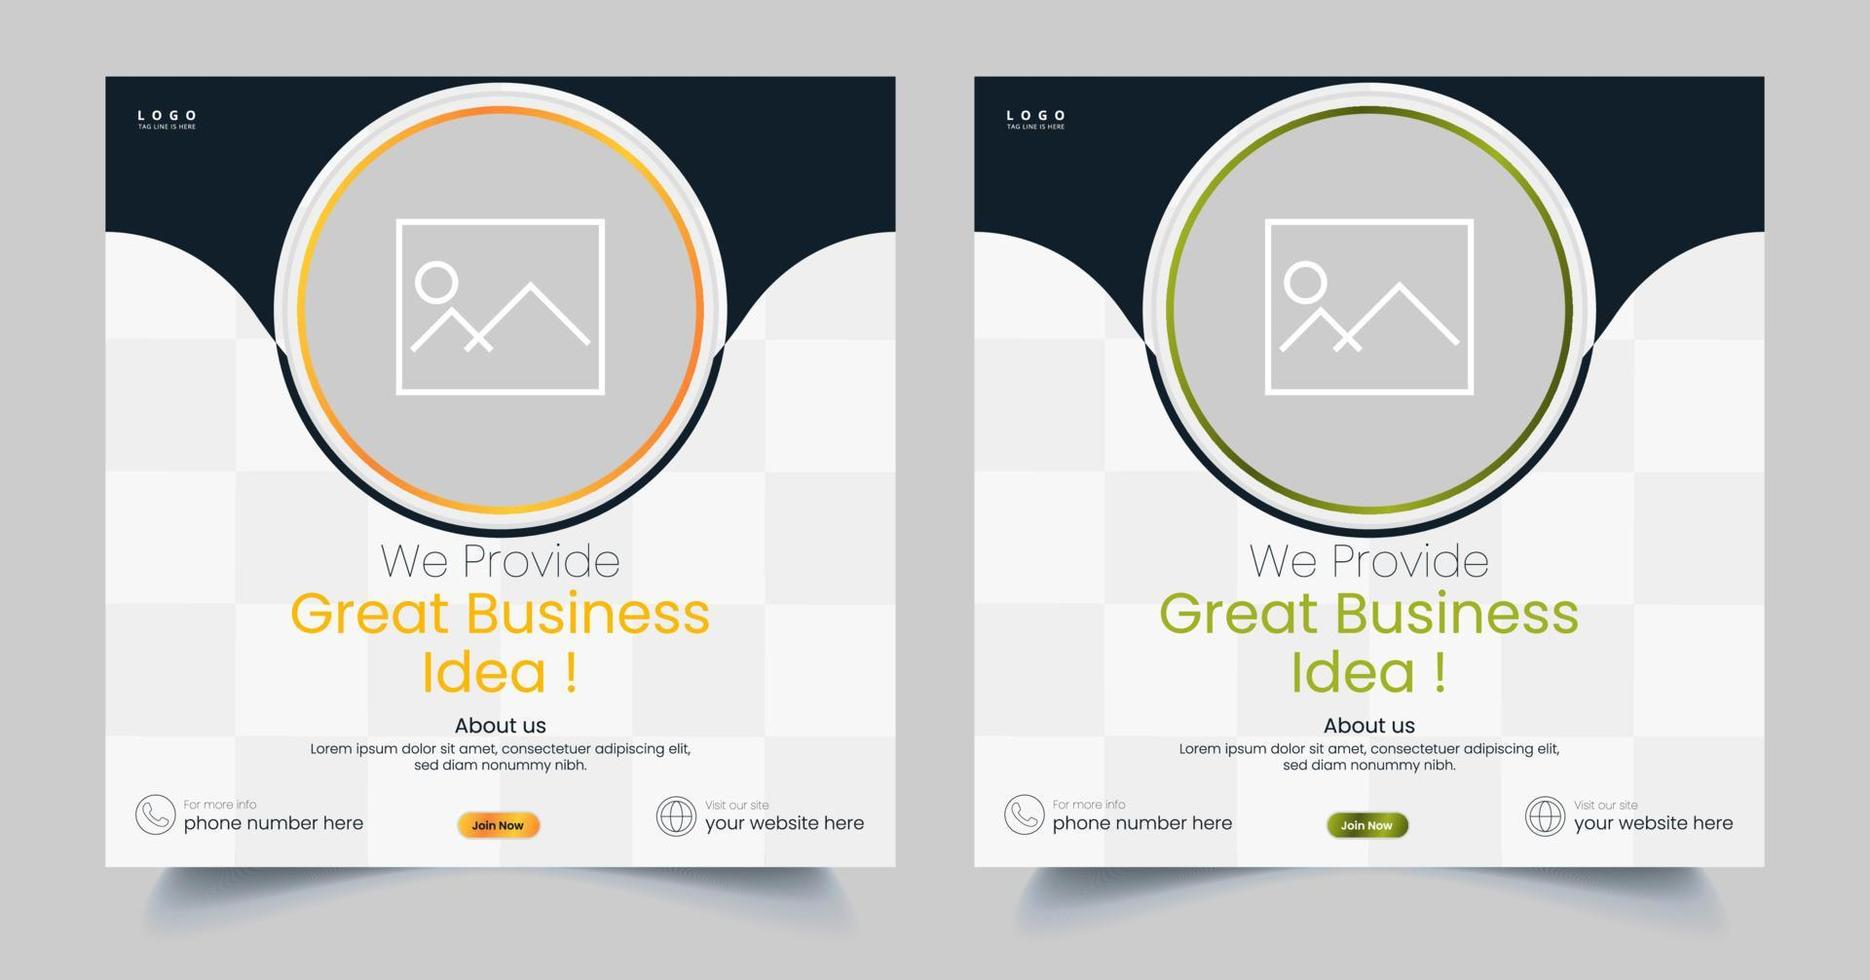 Digital business marketing banner for social media post template design vector